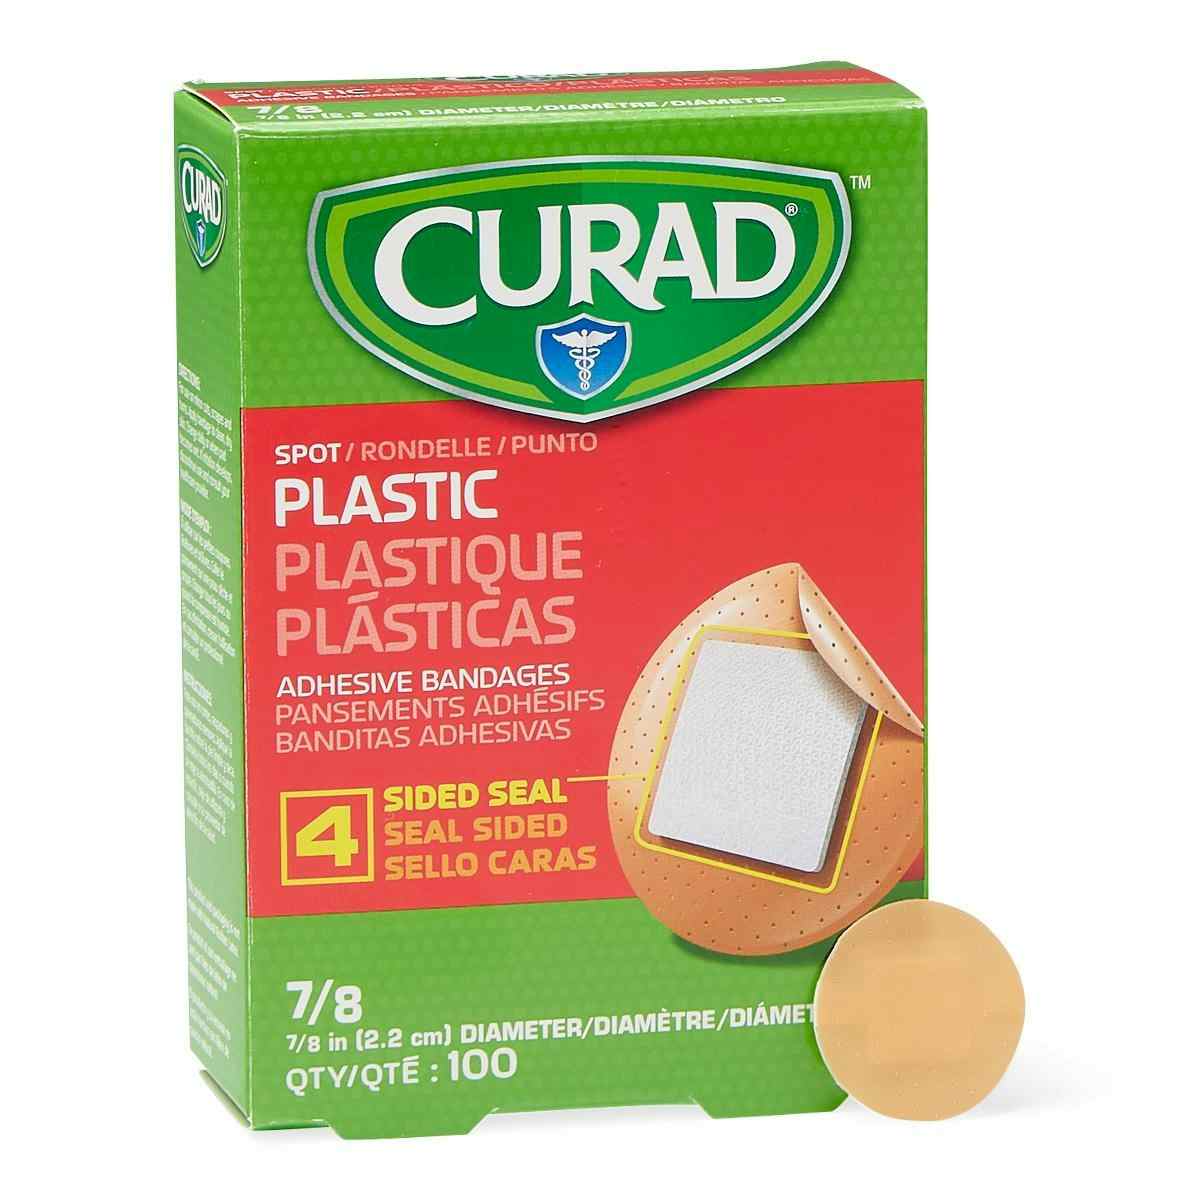 Curad Plastic Adhesive Bandages, NON25501H, 7/8" dia. - Box of 100